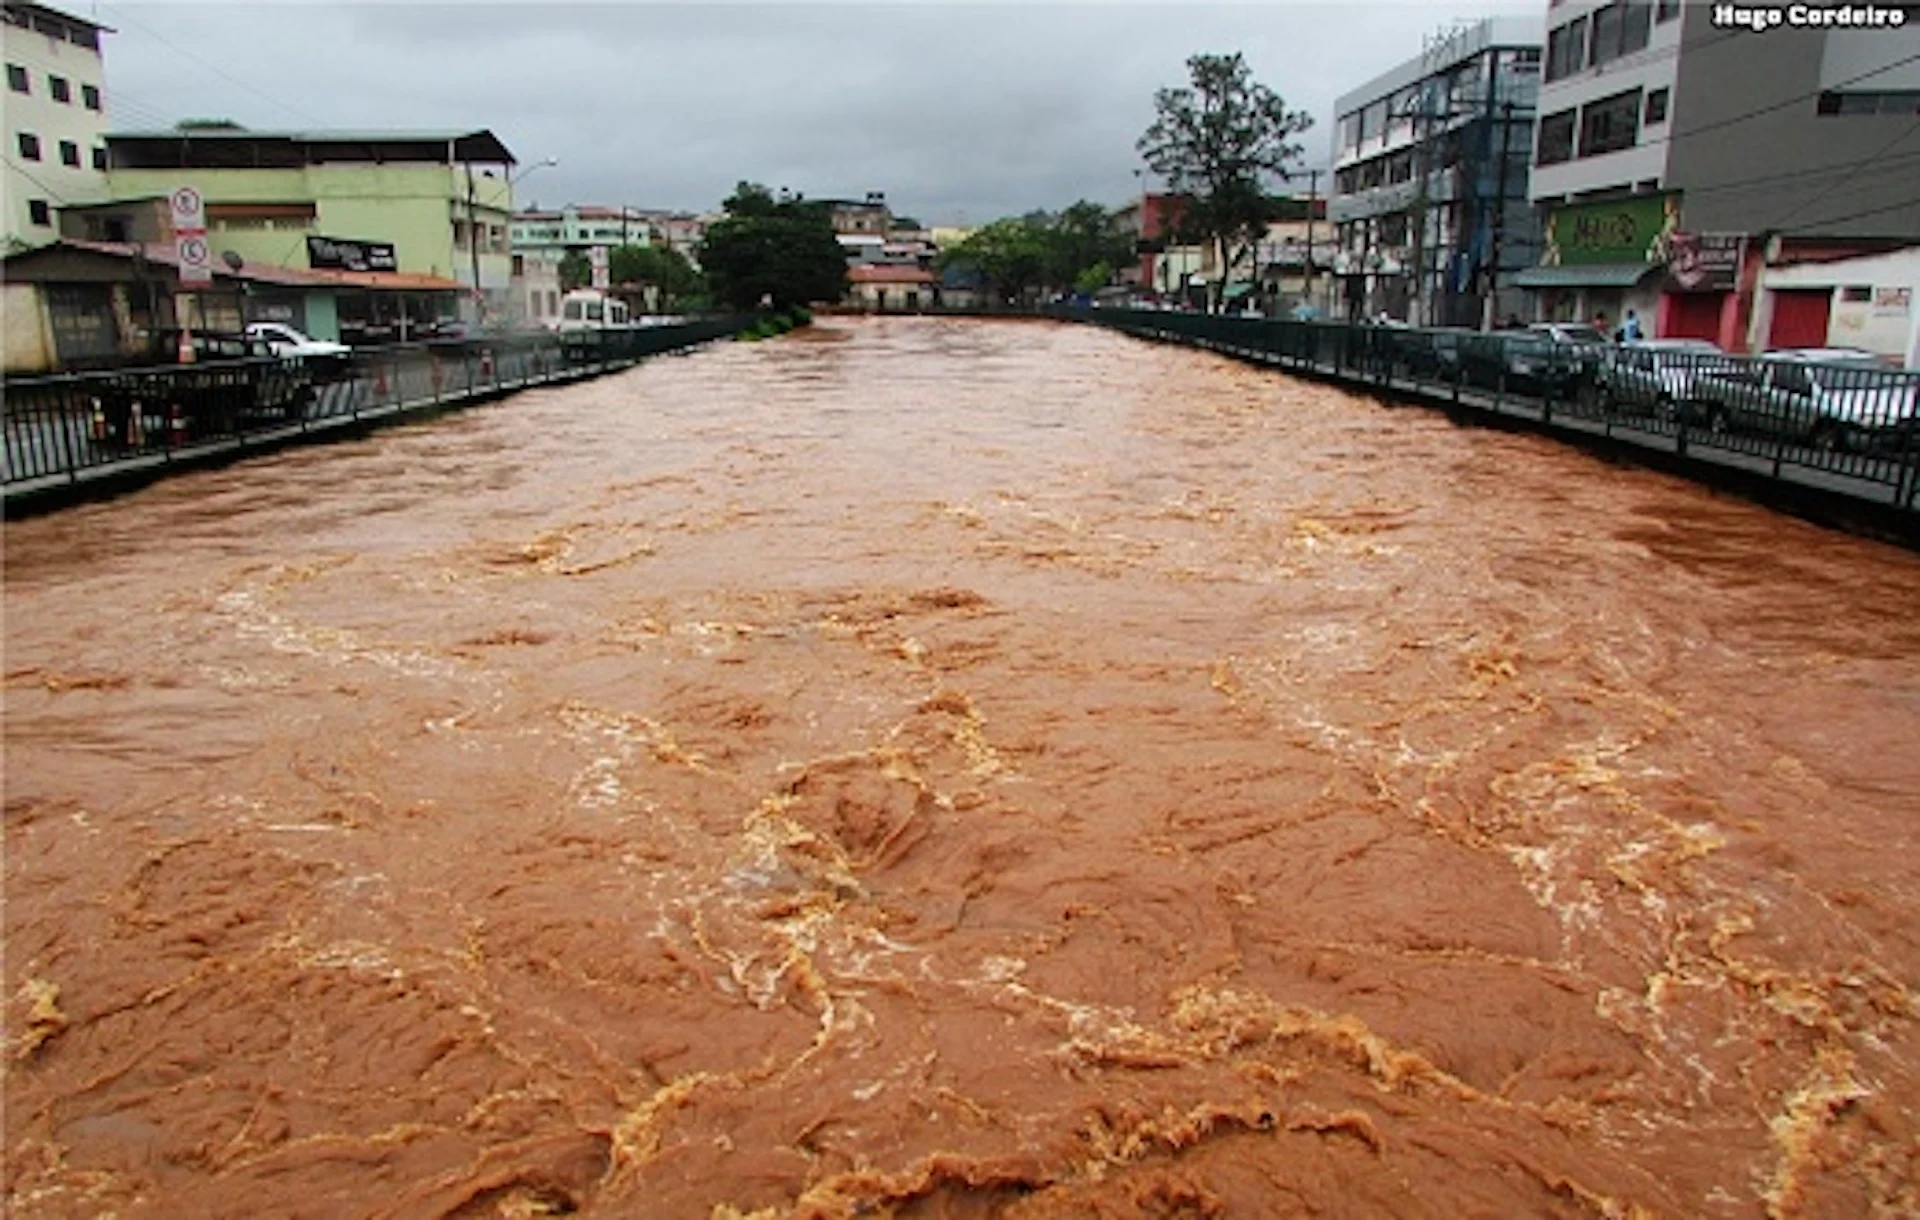 Brazil flooding/Getty Images/Hugo Cordeiro/863195288-170667a